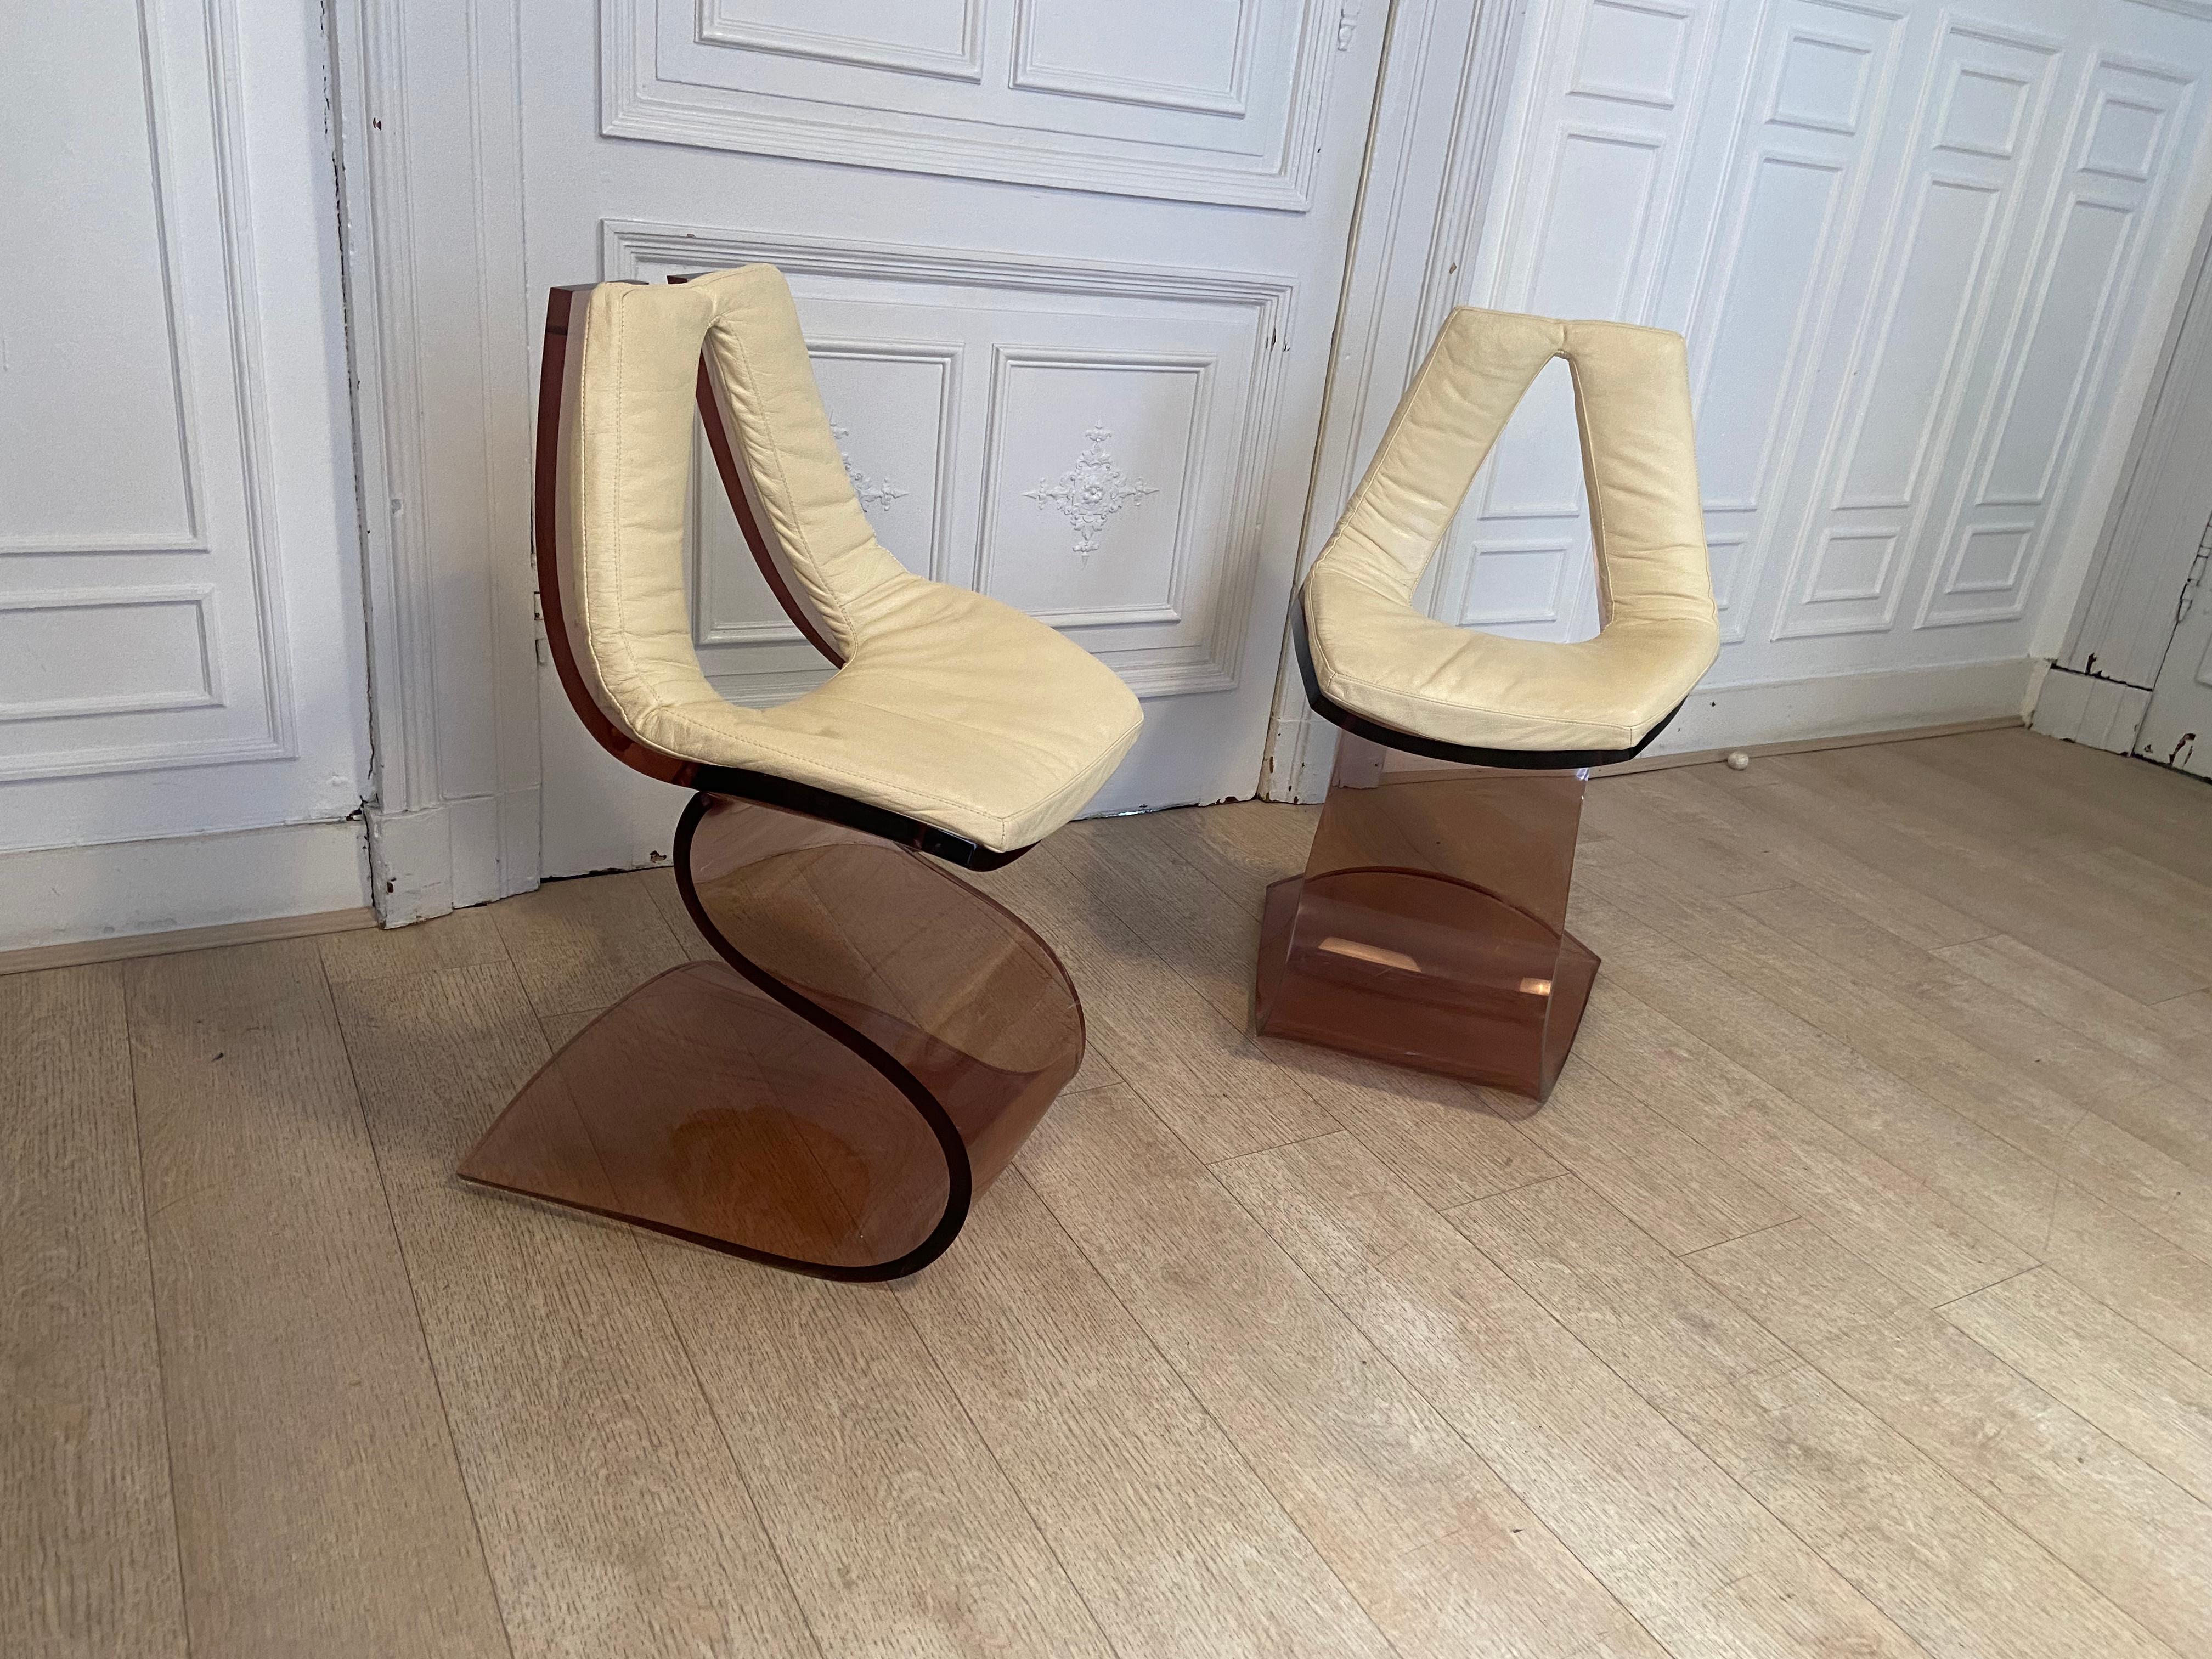 Michel Dumas Chairs, Plexiglass, 1970s For Sale 3